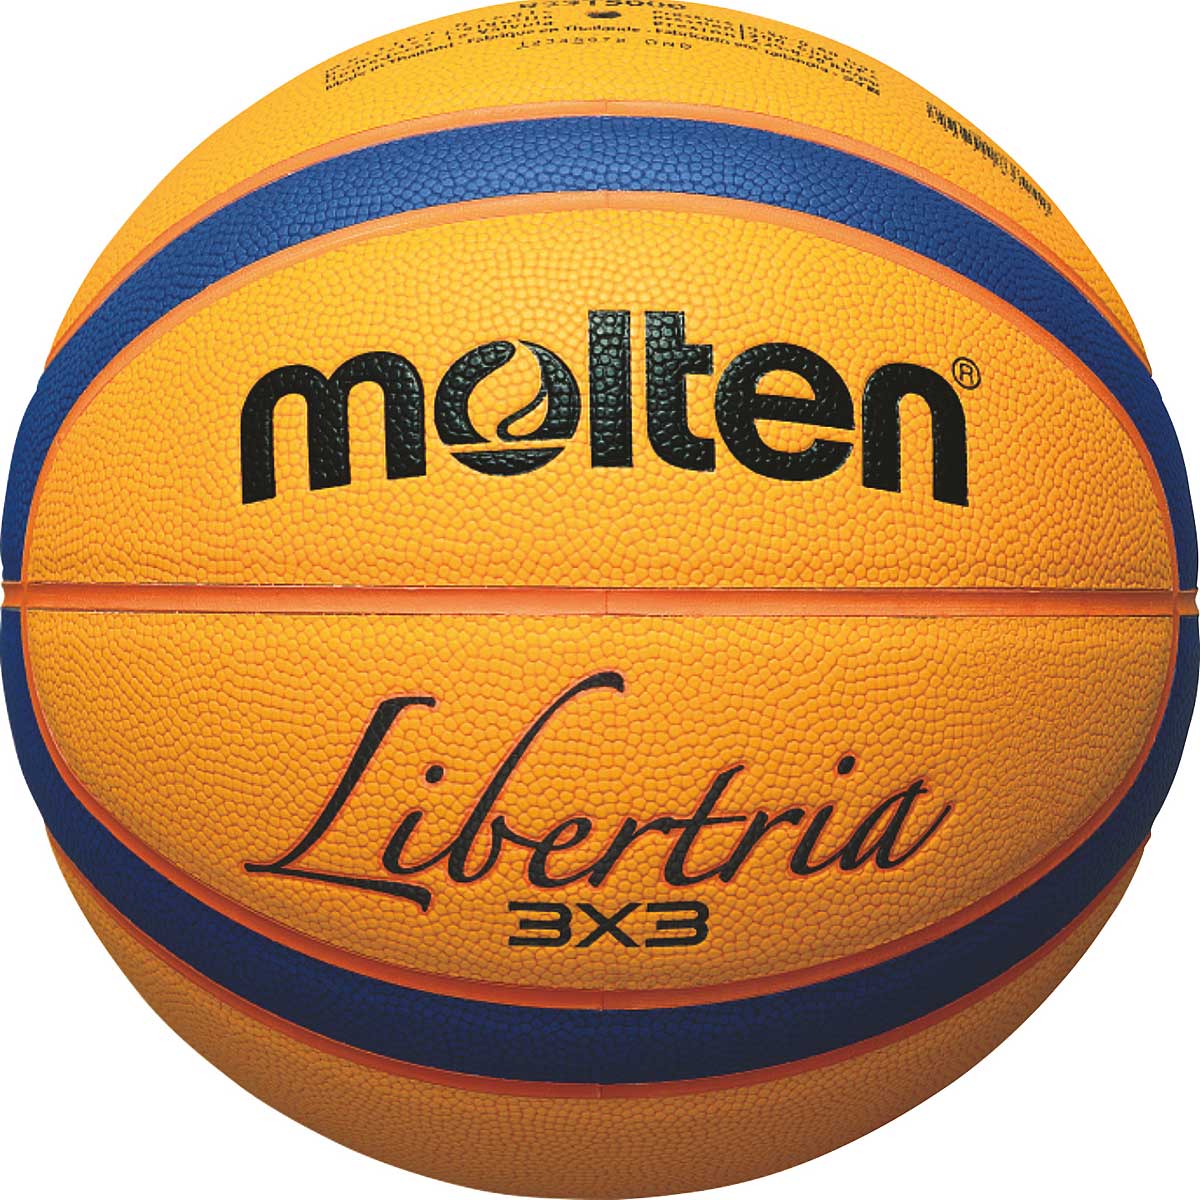 Molten B33T5000 Basketball, Yellow/Blue/Orange